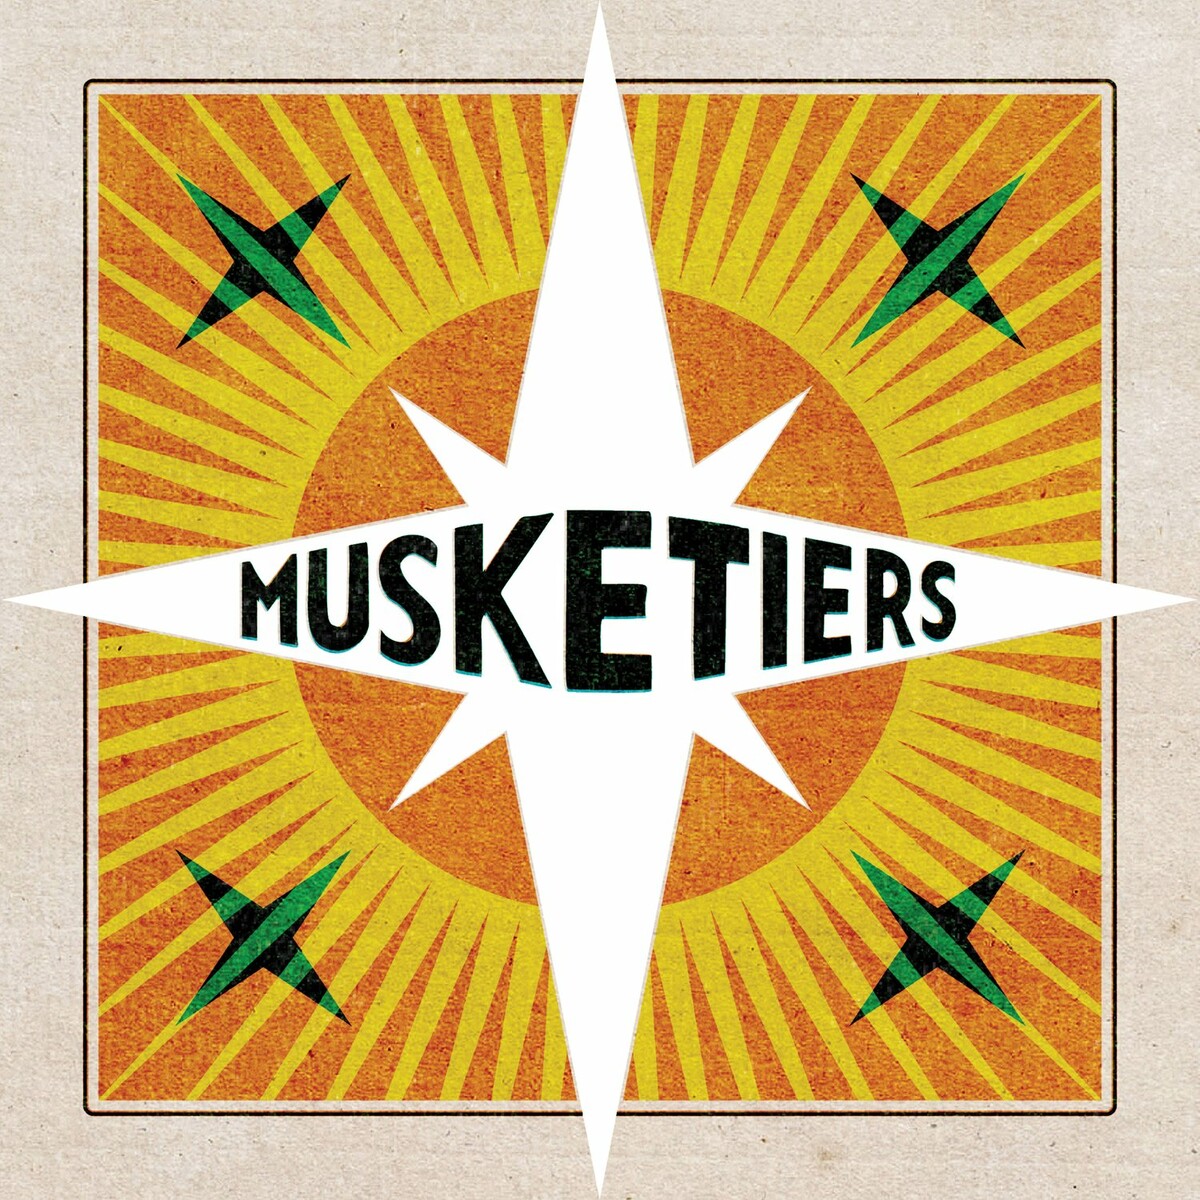 Musketiers - Musketiers (2022) FLAC + MP3